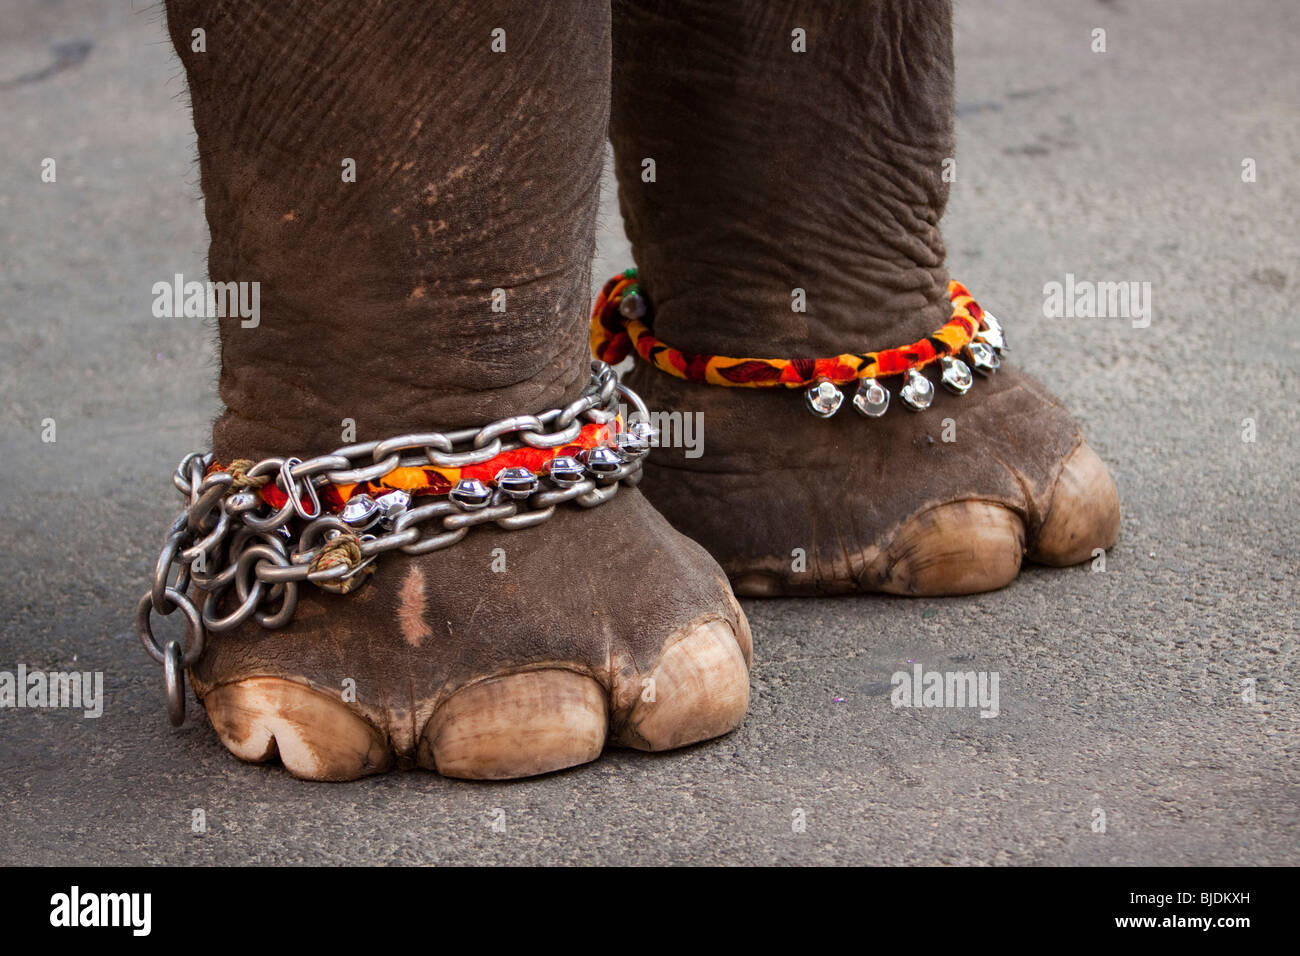 India, Kerala, Kochi, Ernakulam Uthsavom festival, Parayeduppu elephant procession, chained feet of elephant Stock Photo